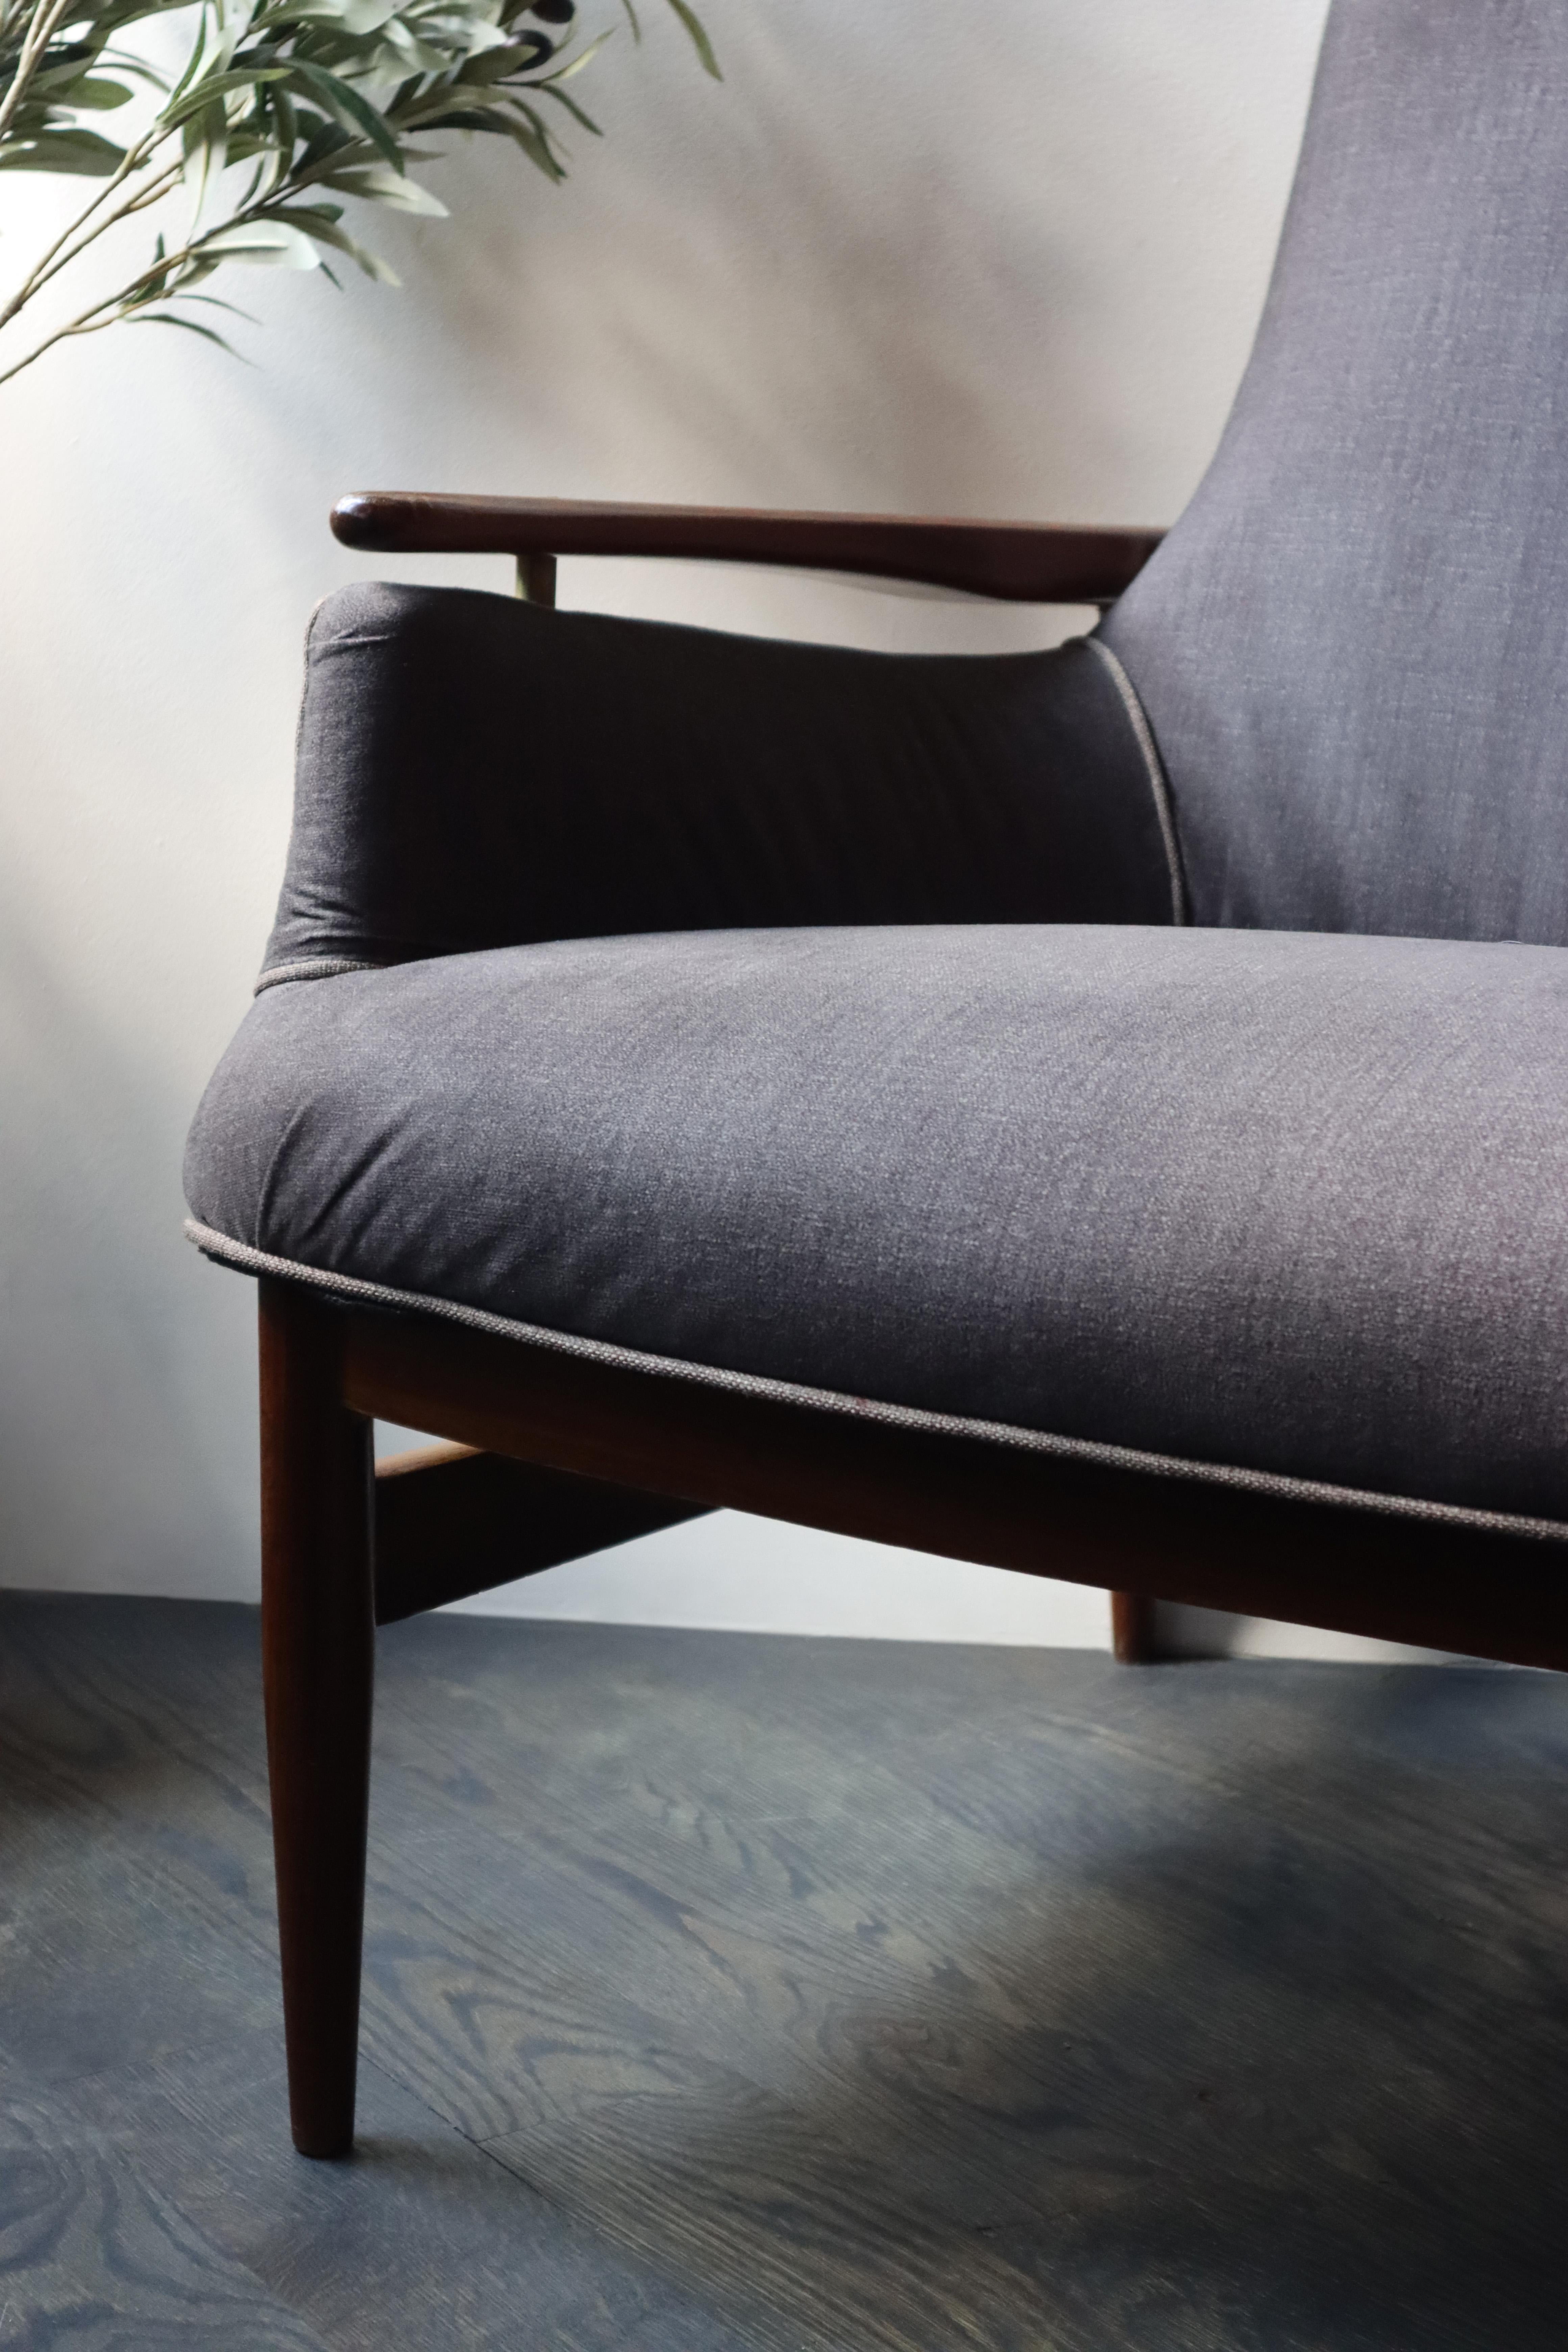 A Classic Mid-Century Modern, Danish wood love seat.